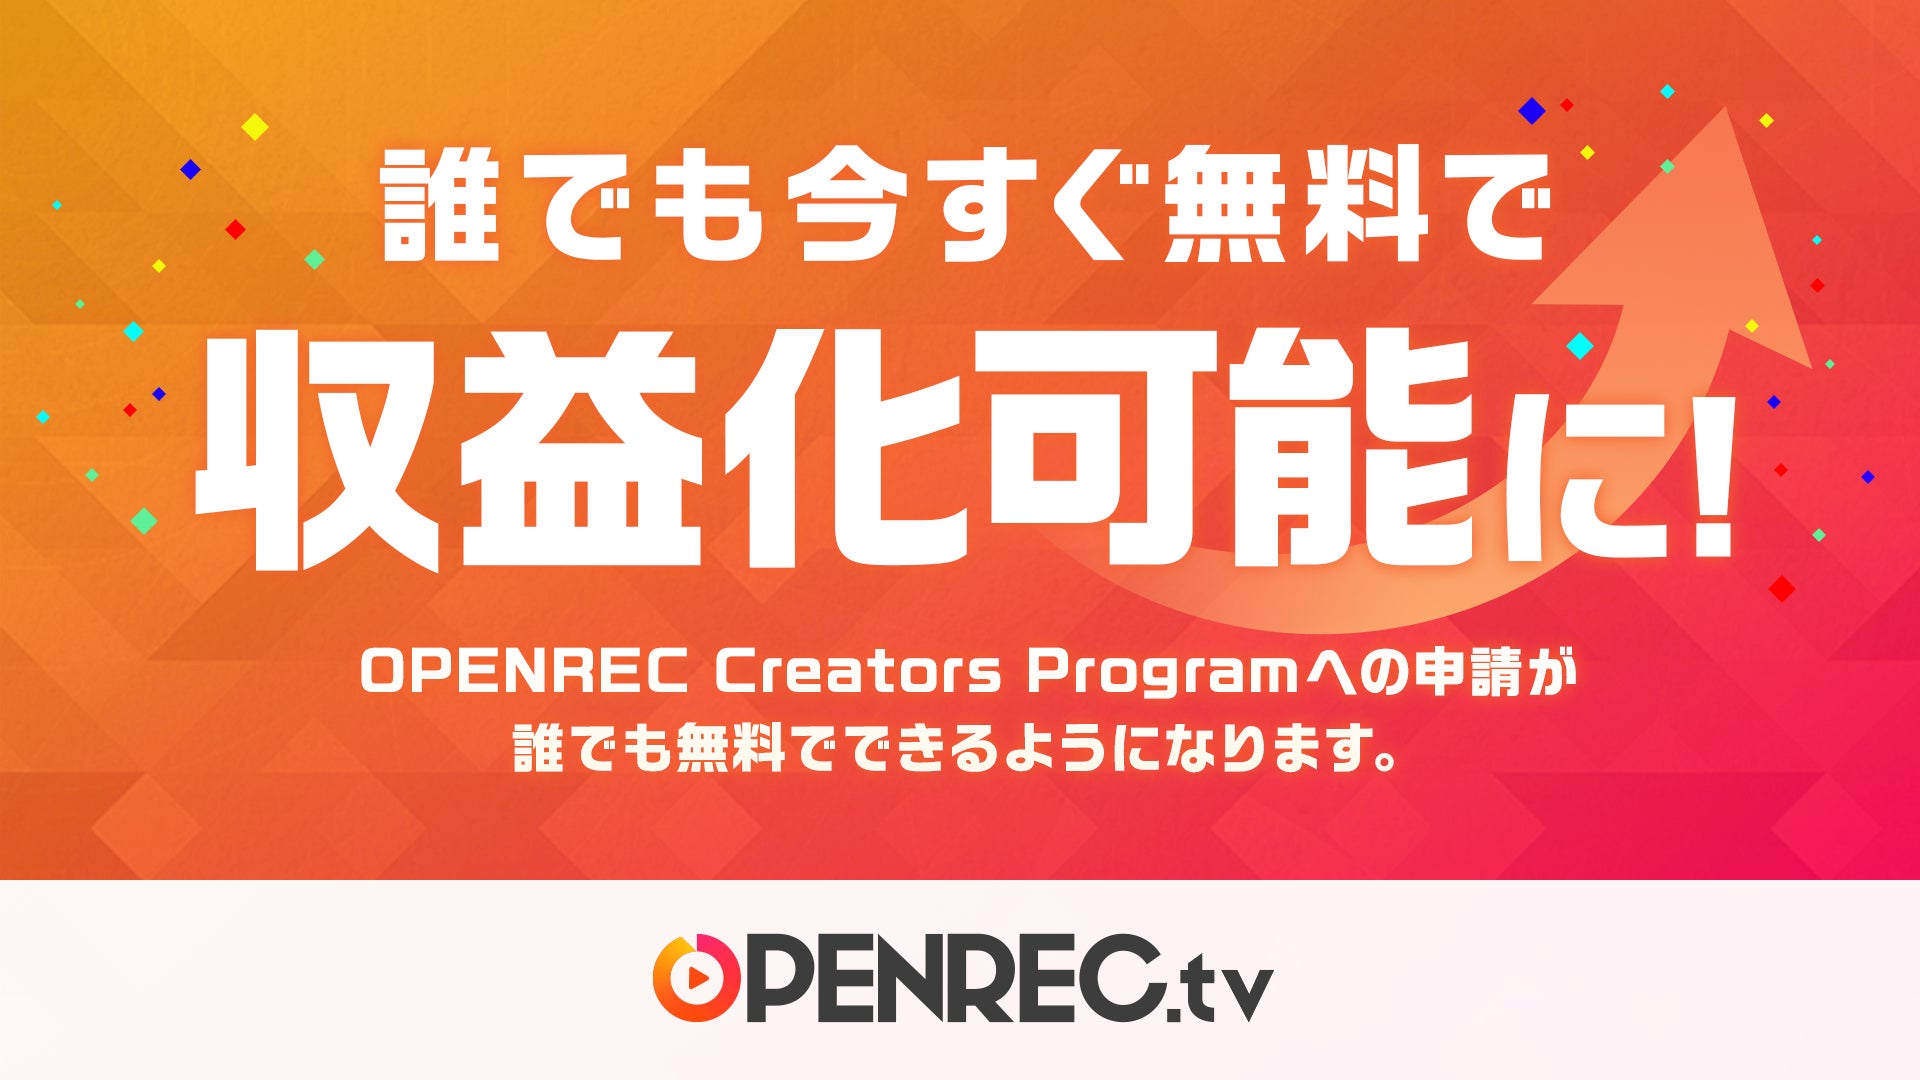 OPENREC.tv、収益化プログラム「OPENREC Creators Program」の参加条件を変更。誰でも今すぐ無料で収益化が可能に。